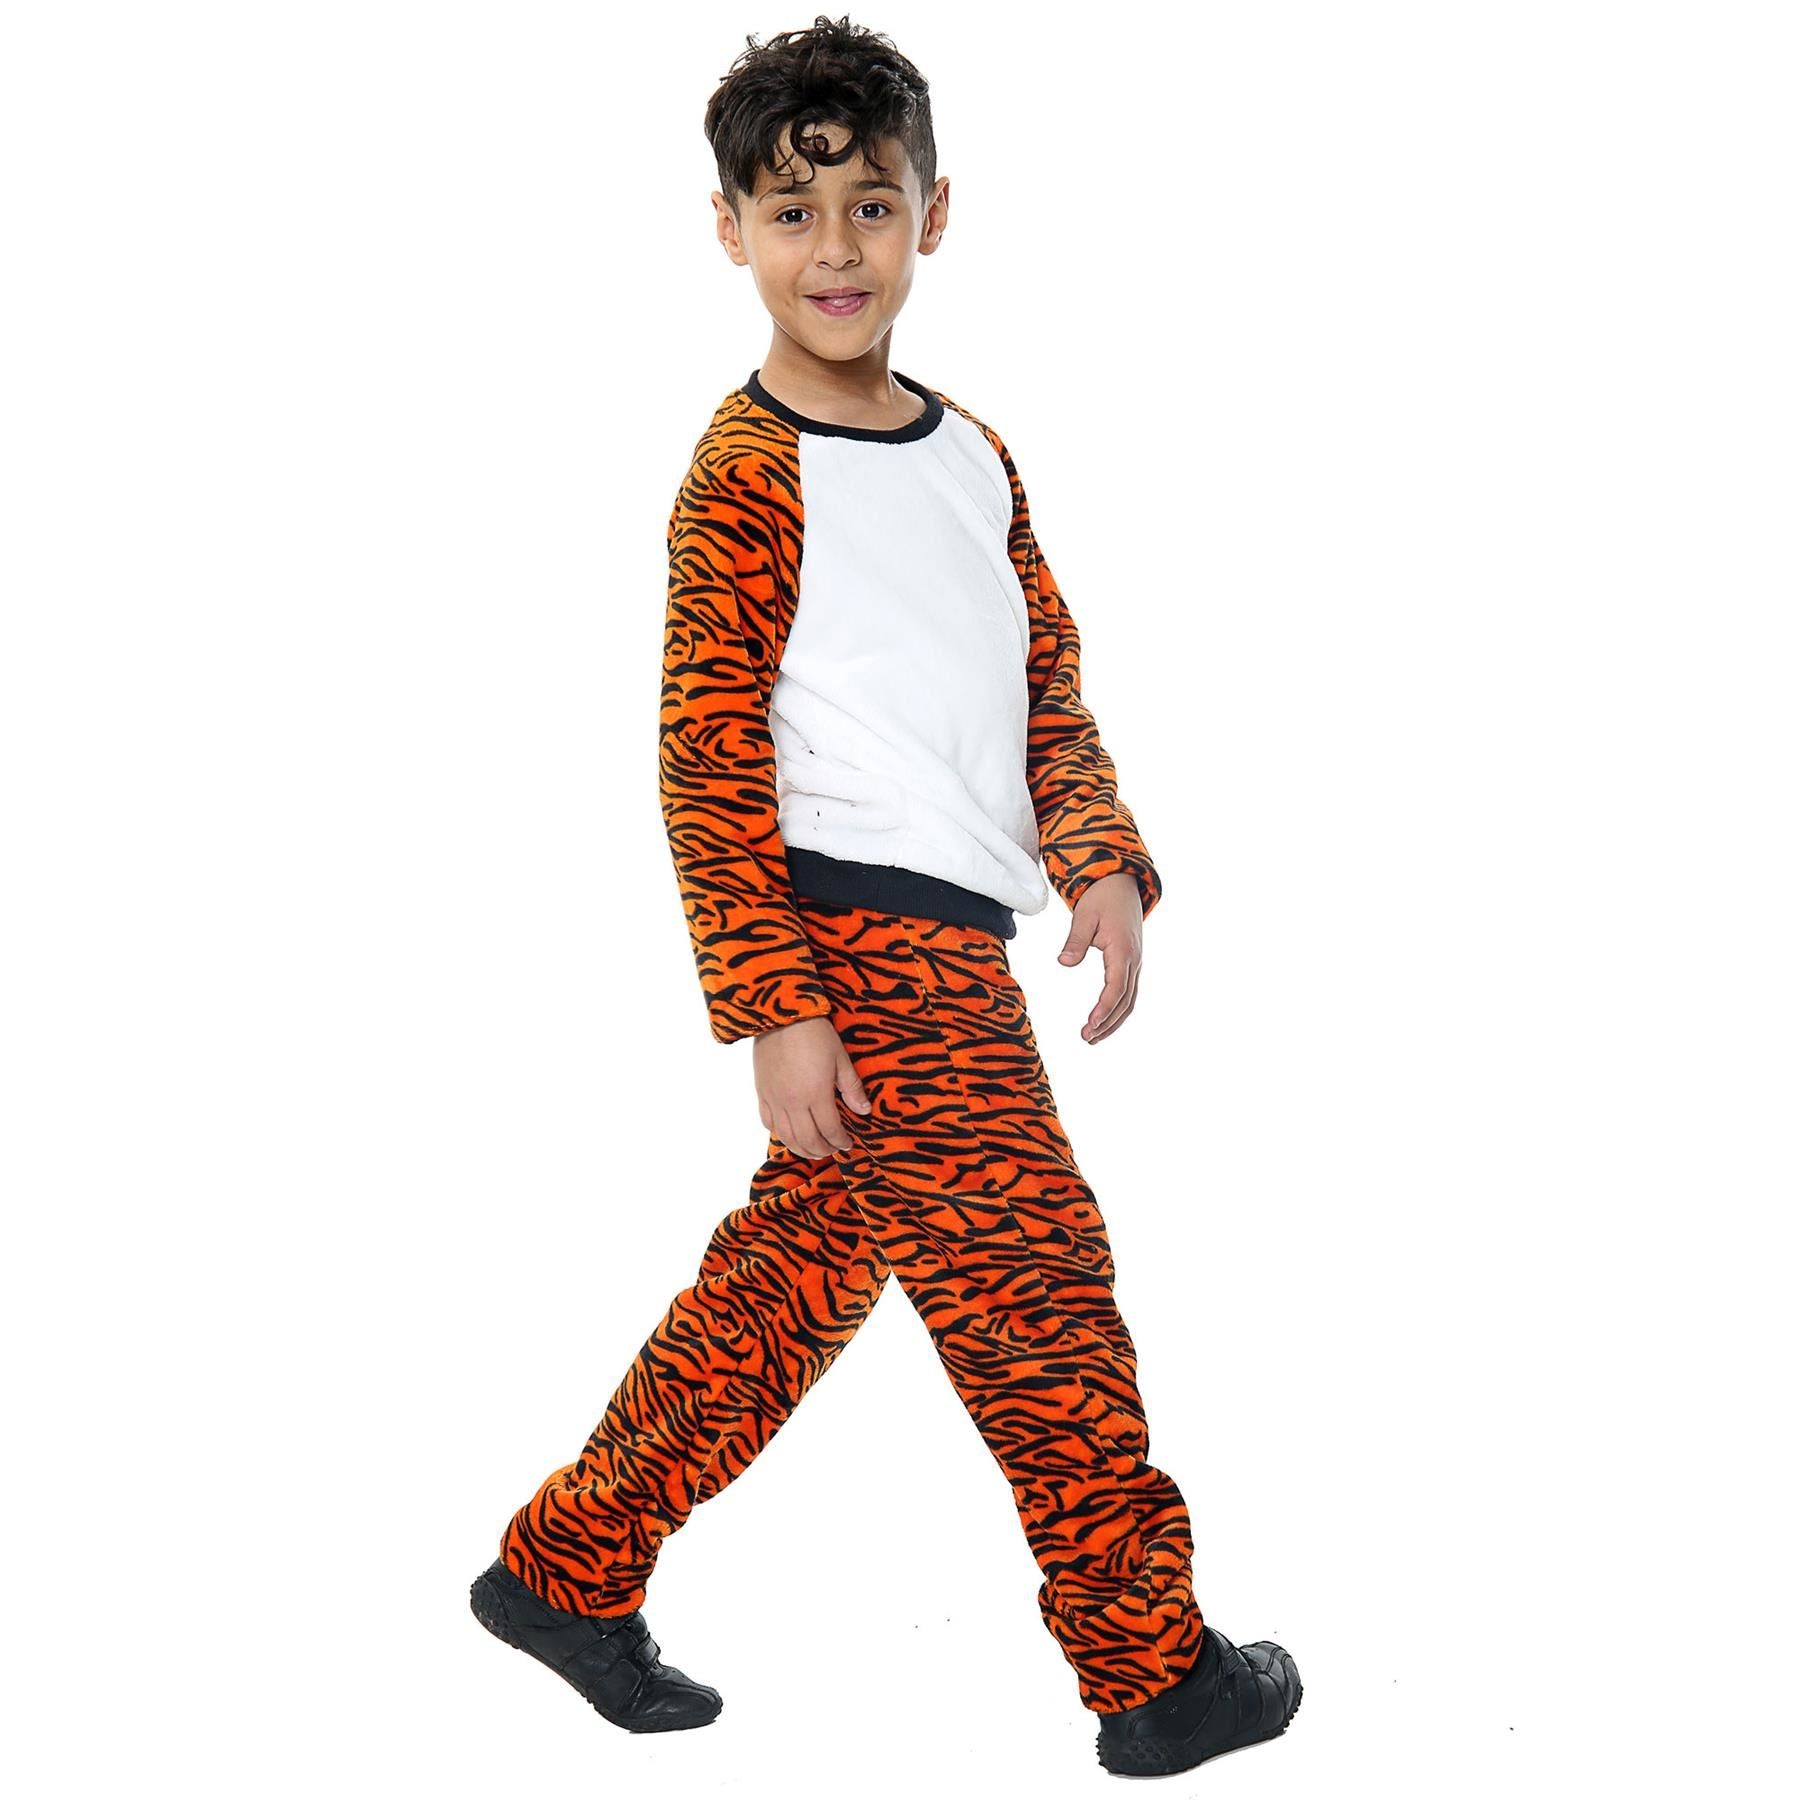 Kids Tiger Print Sleeve Pyjamas Sleepsuit Costume For Girls Boys Age 5-13